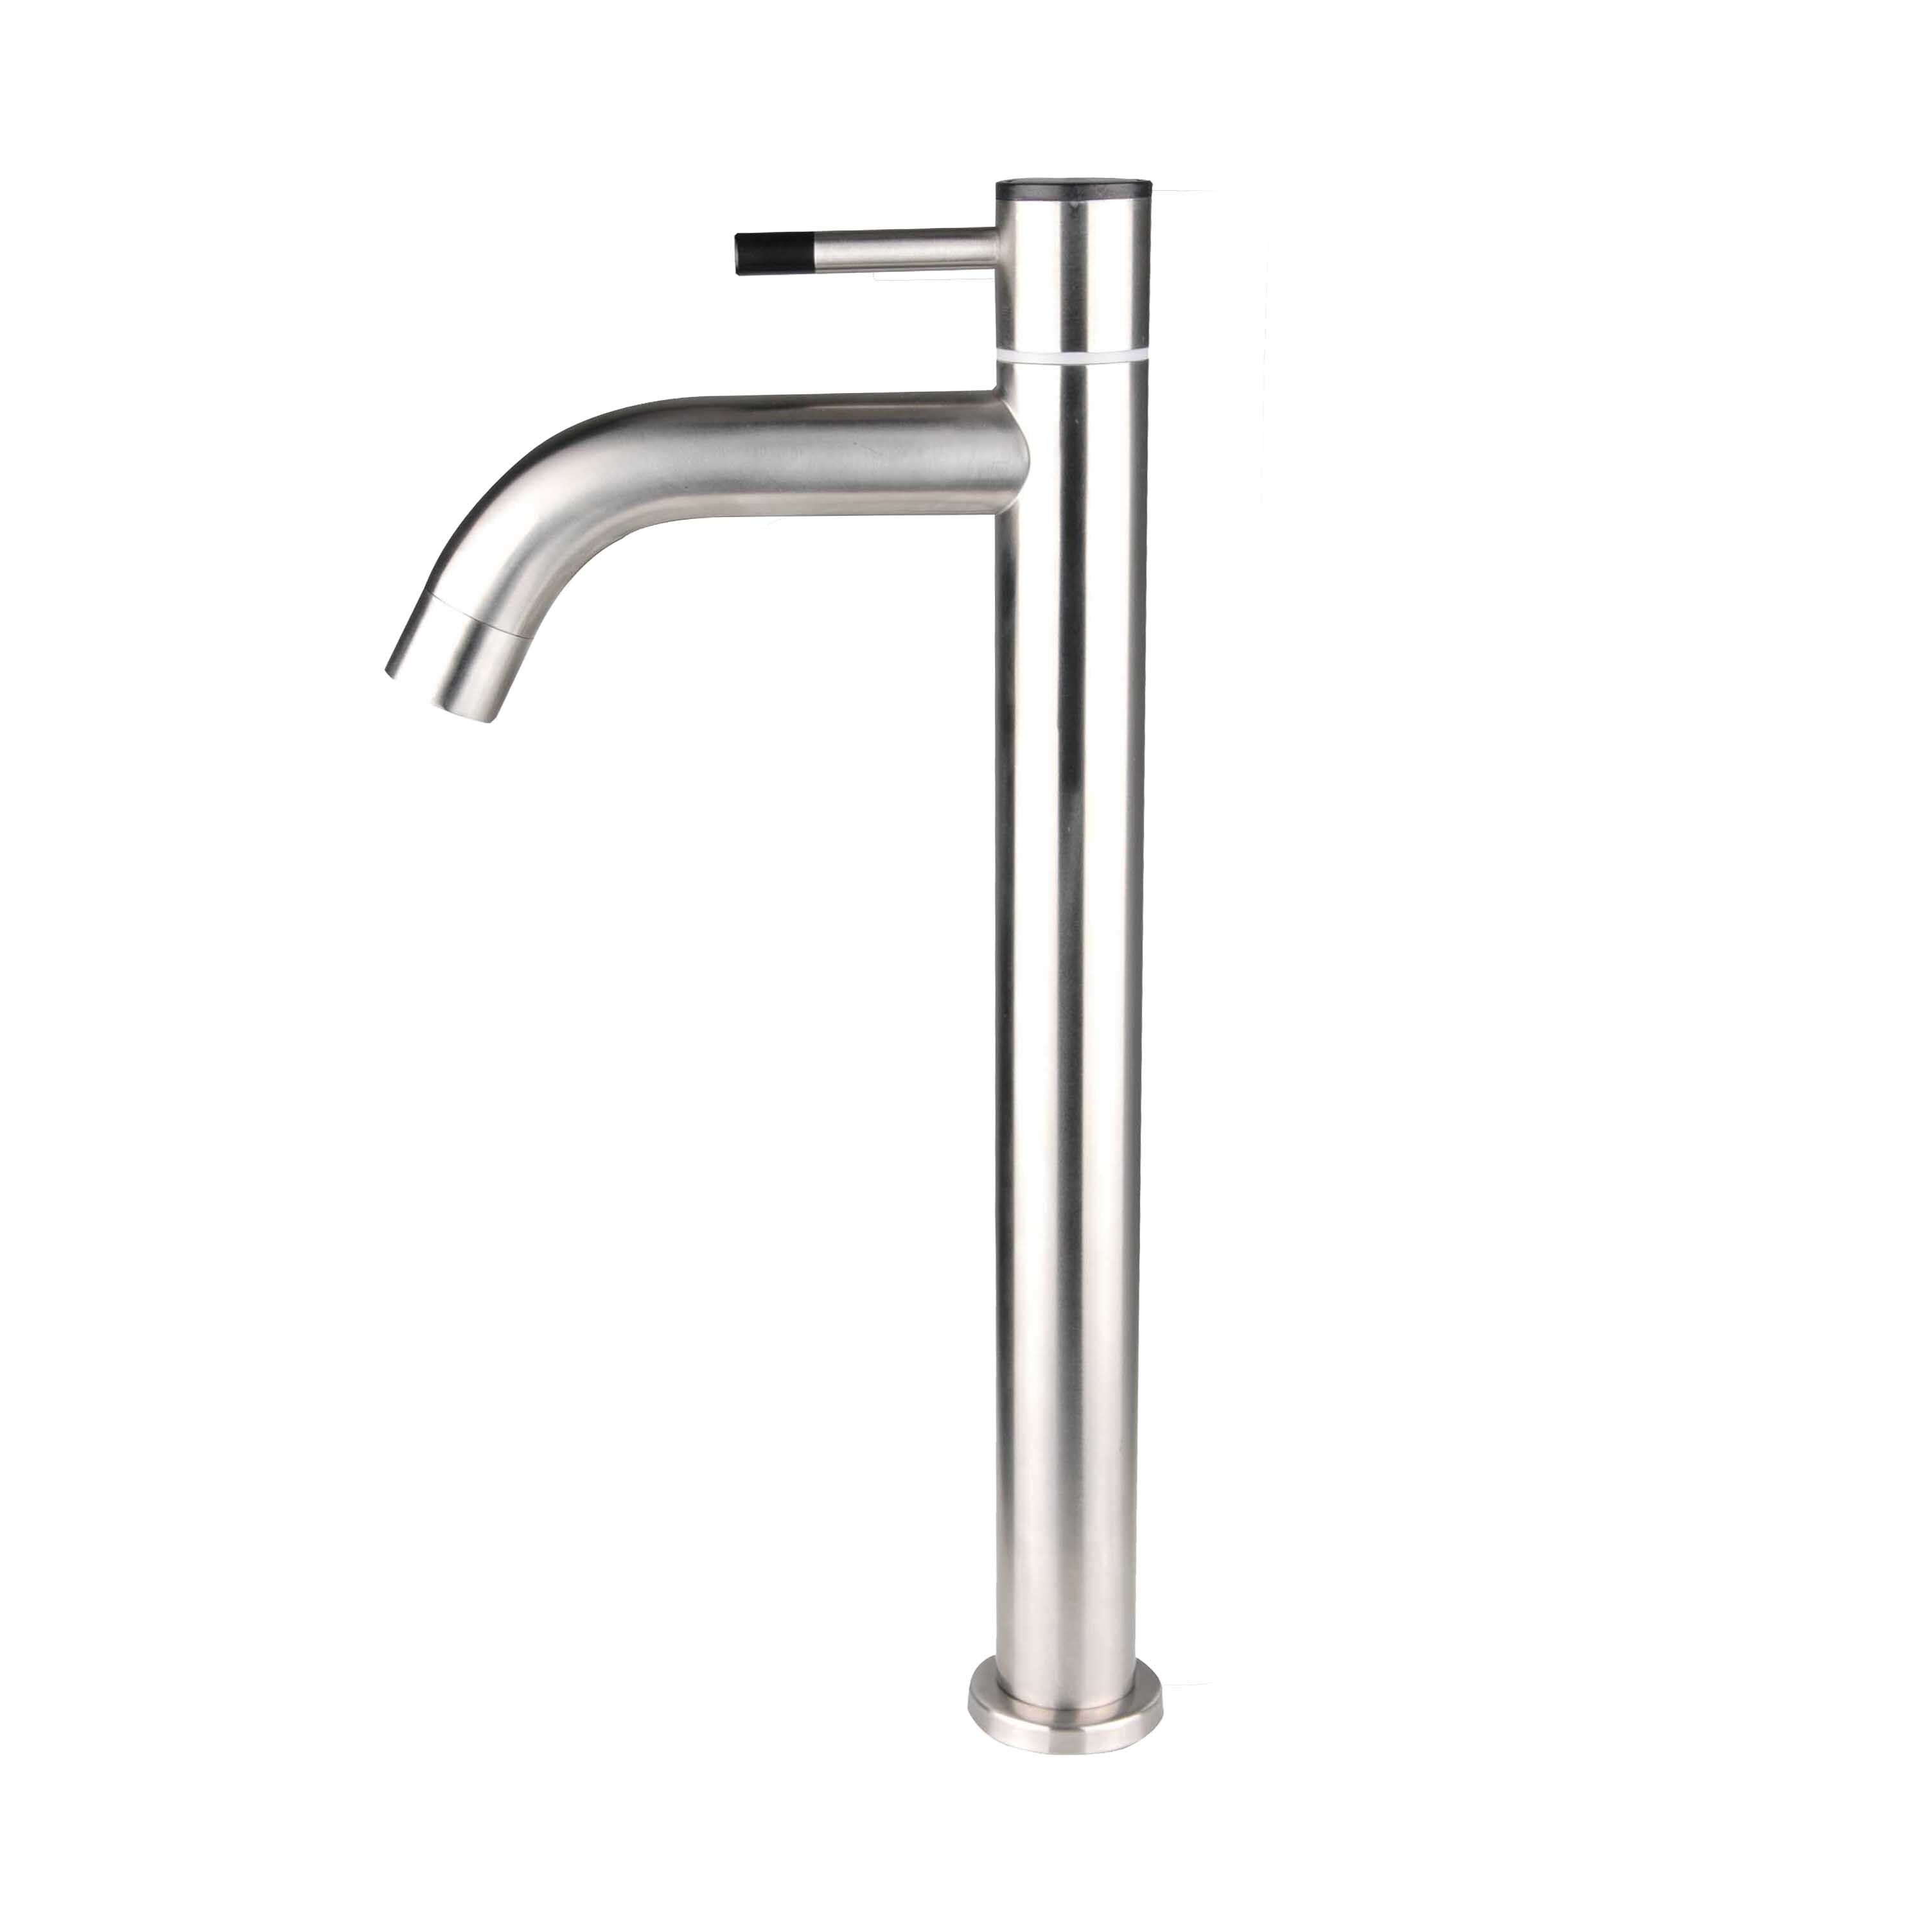 Bathroom Kitchen Single Handle Faucet,Modern Industrial Wet Bar Faucet